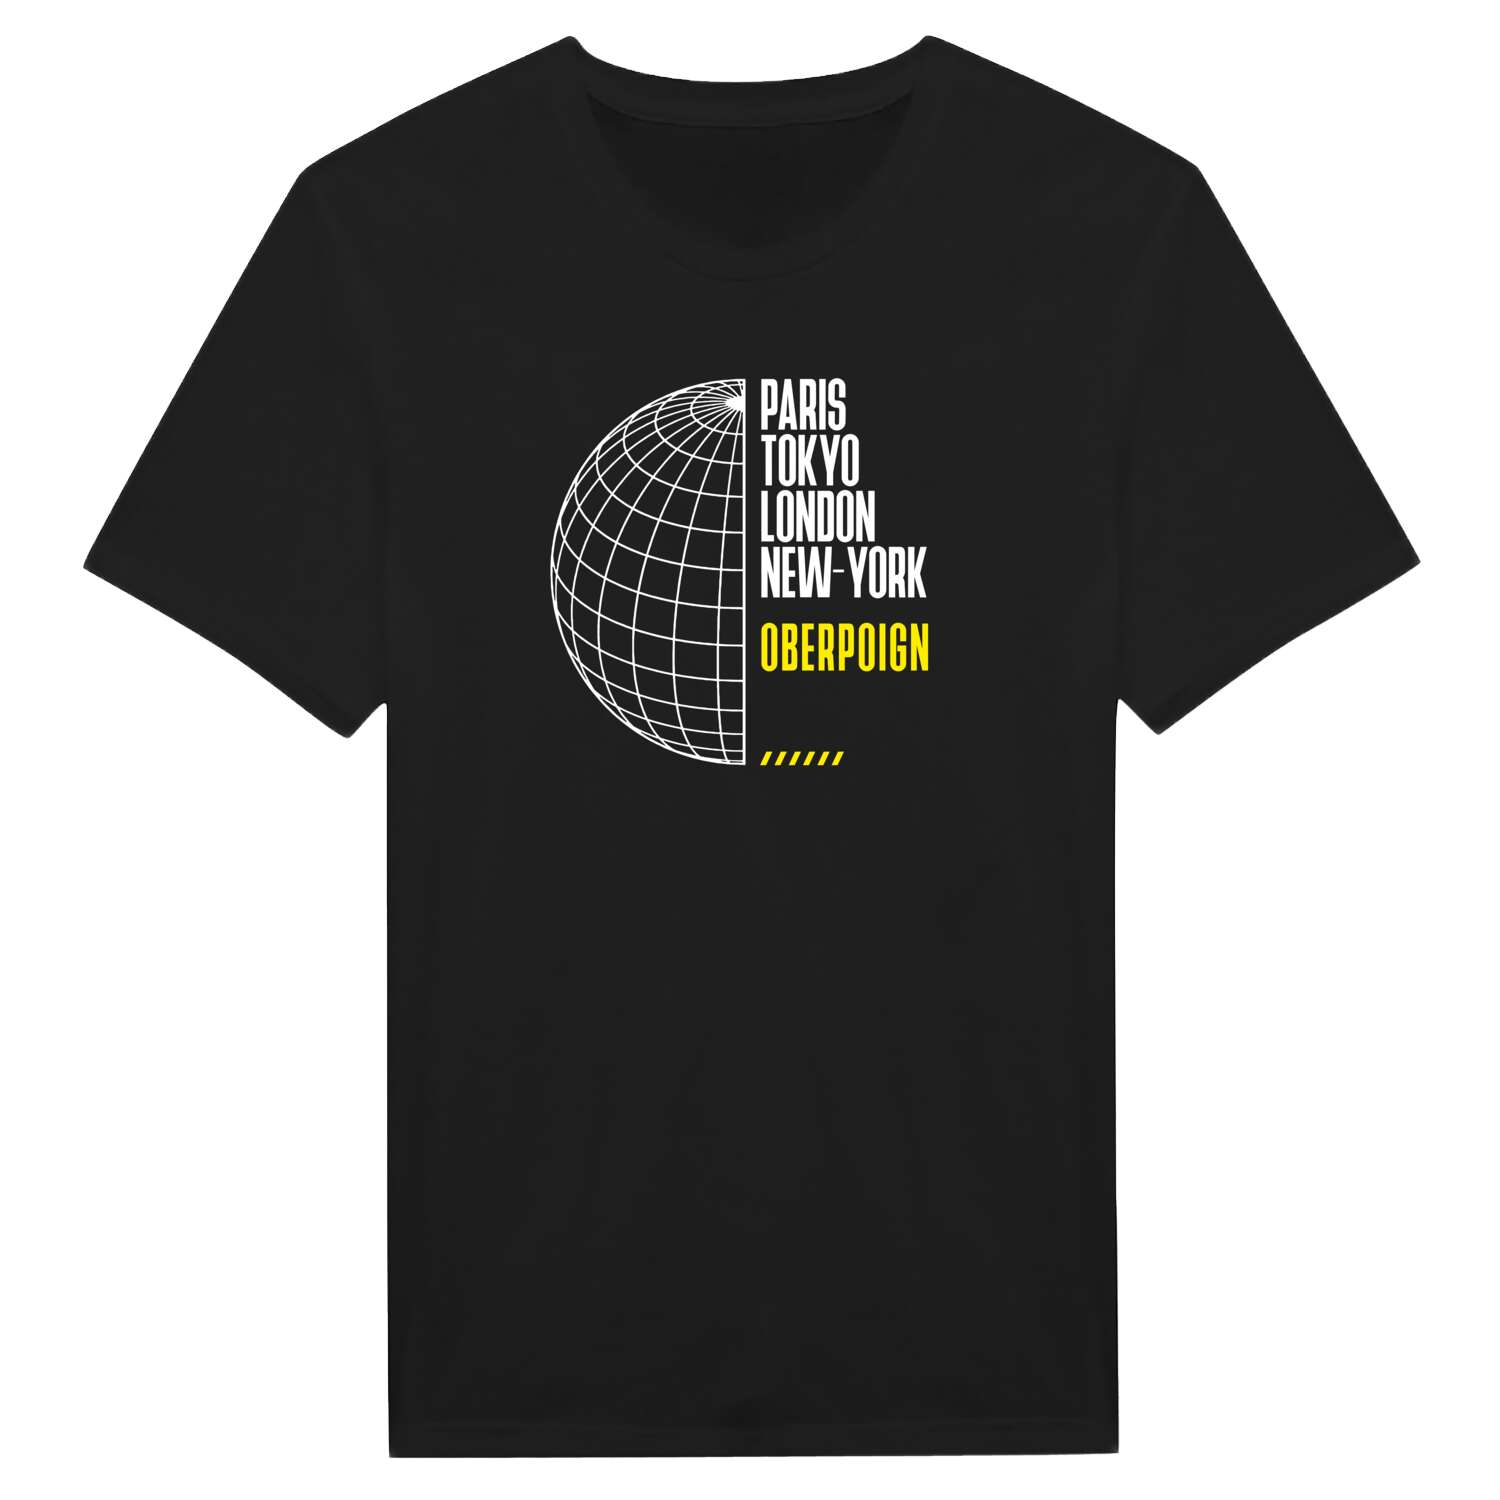 Oberpoign T-Shirt »Paris Tokyo London«